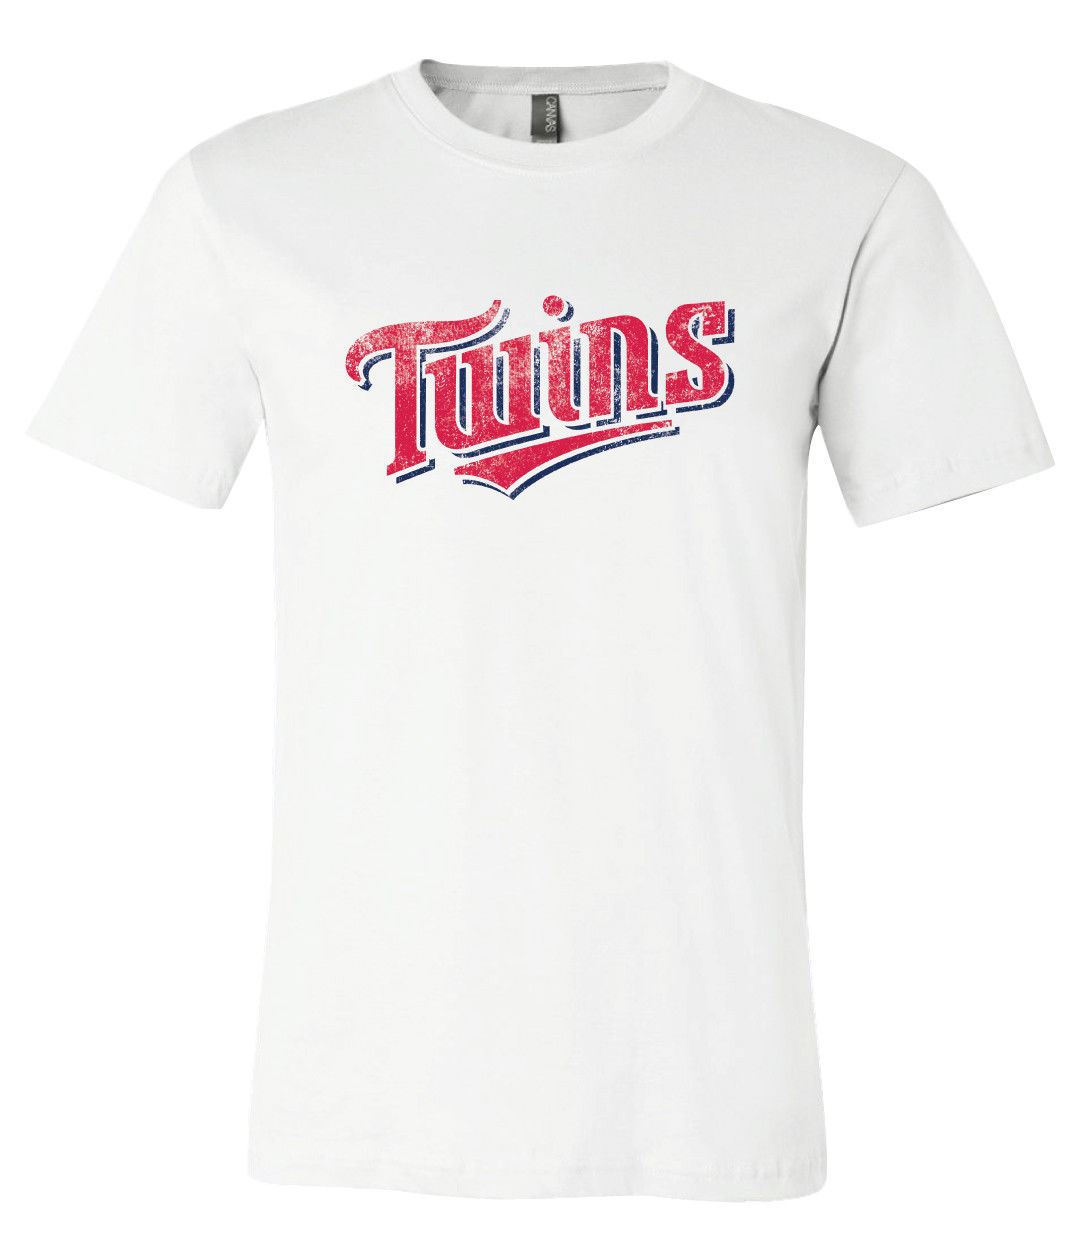 Minnesota Twins Text logo Distressed Vintage logo T-shirt 6 Sizes